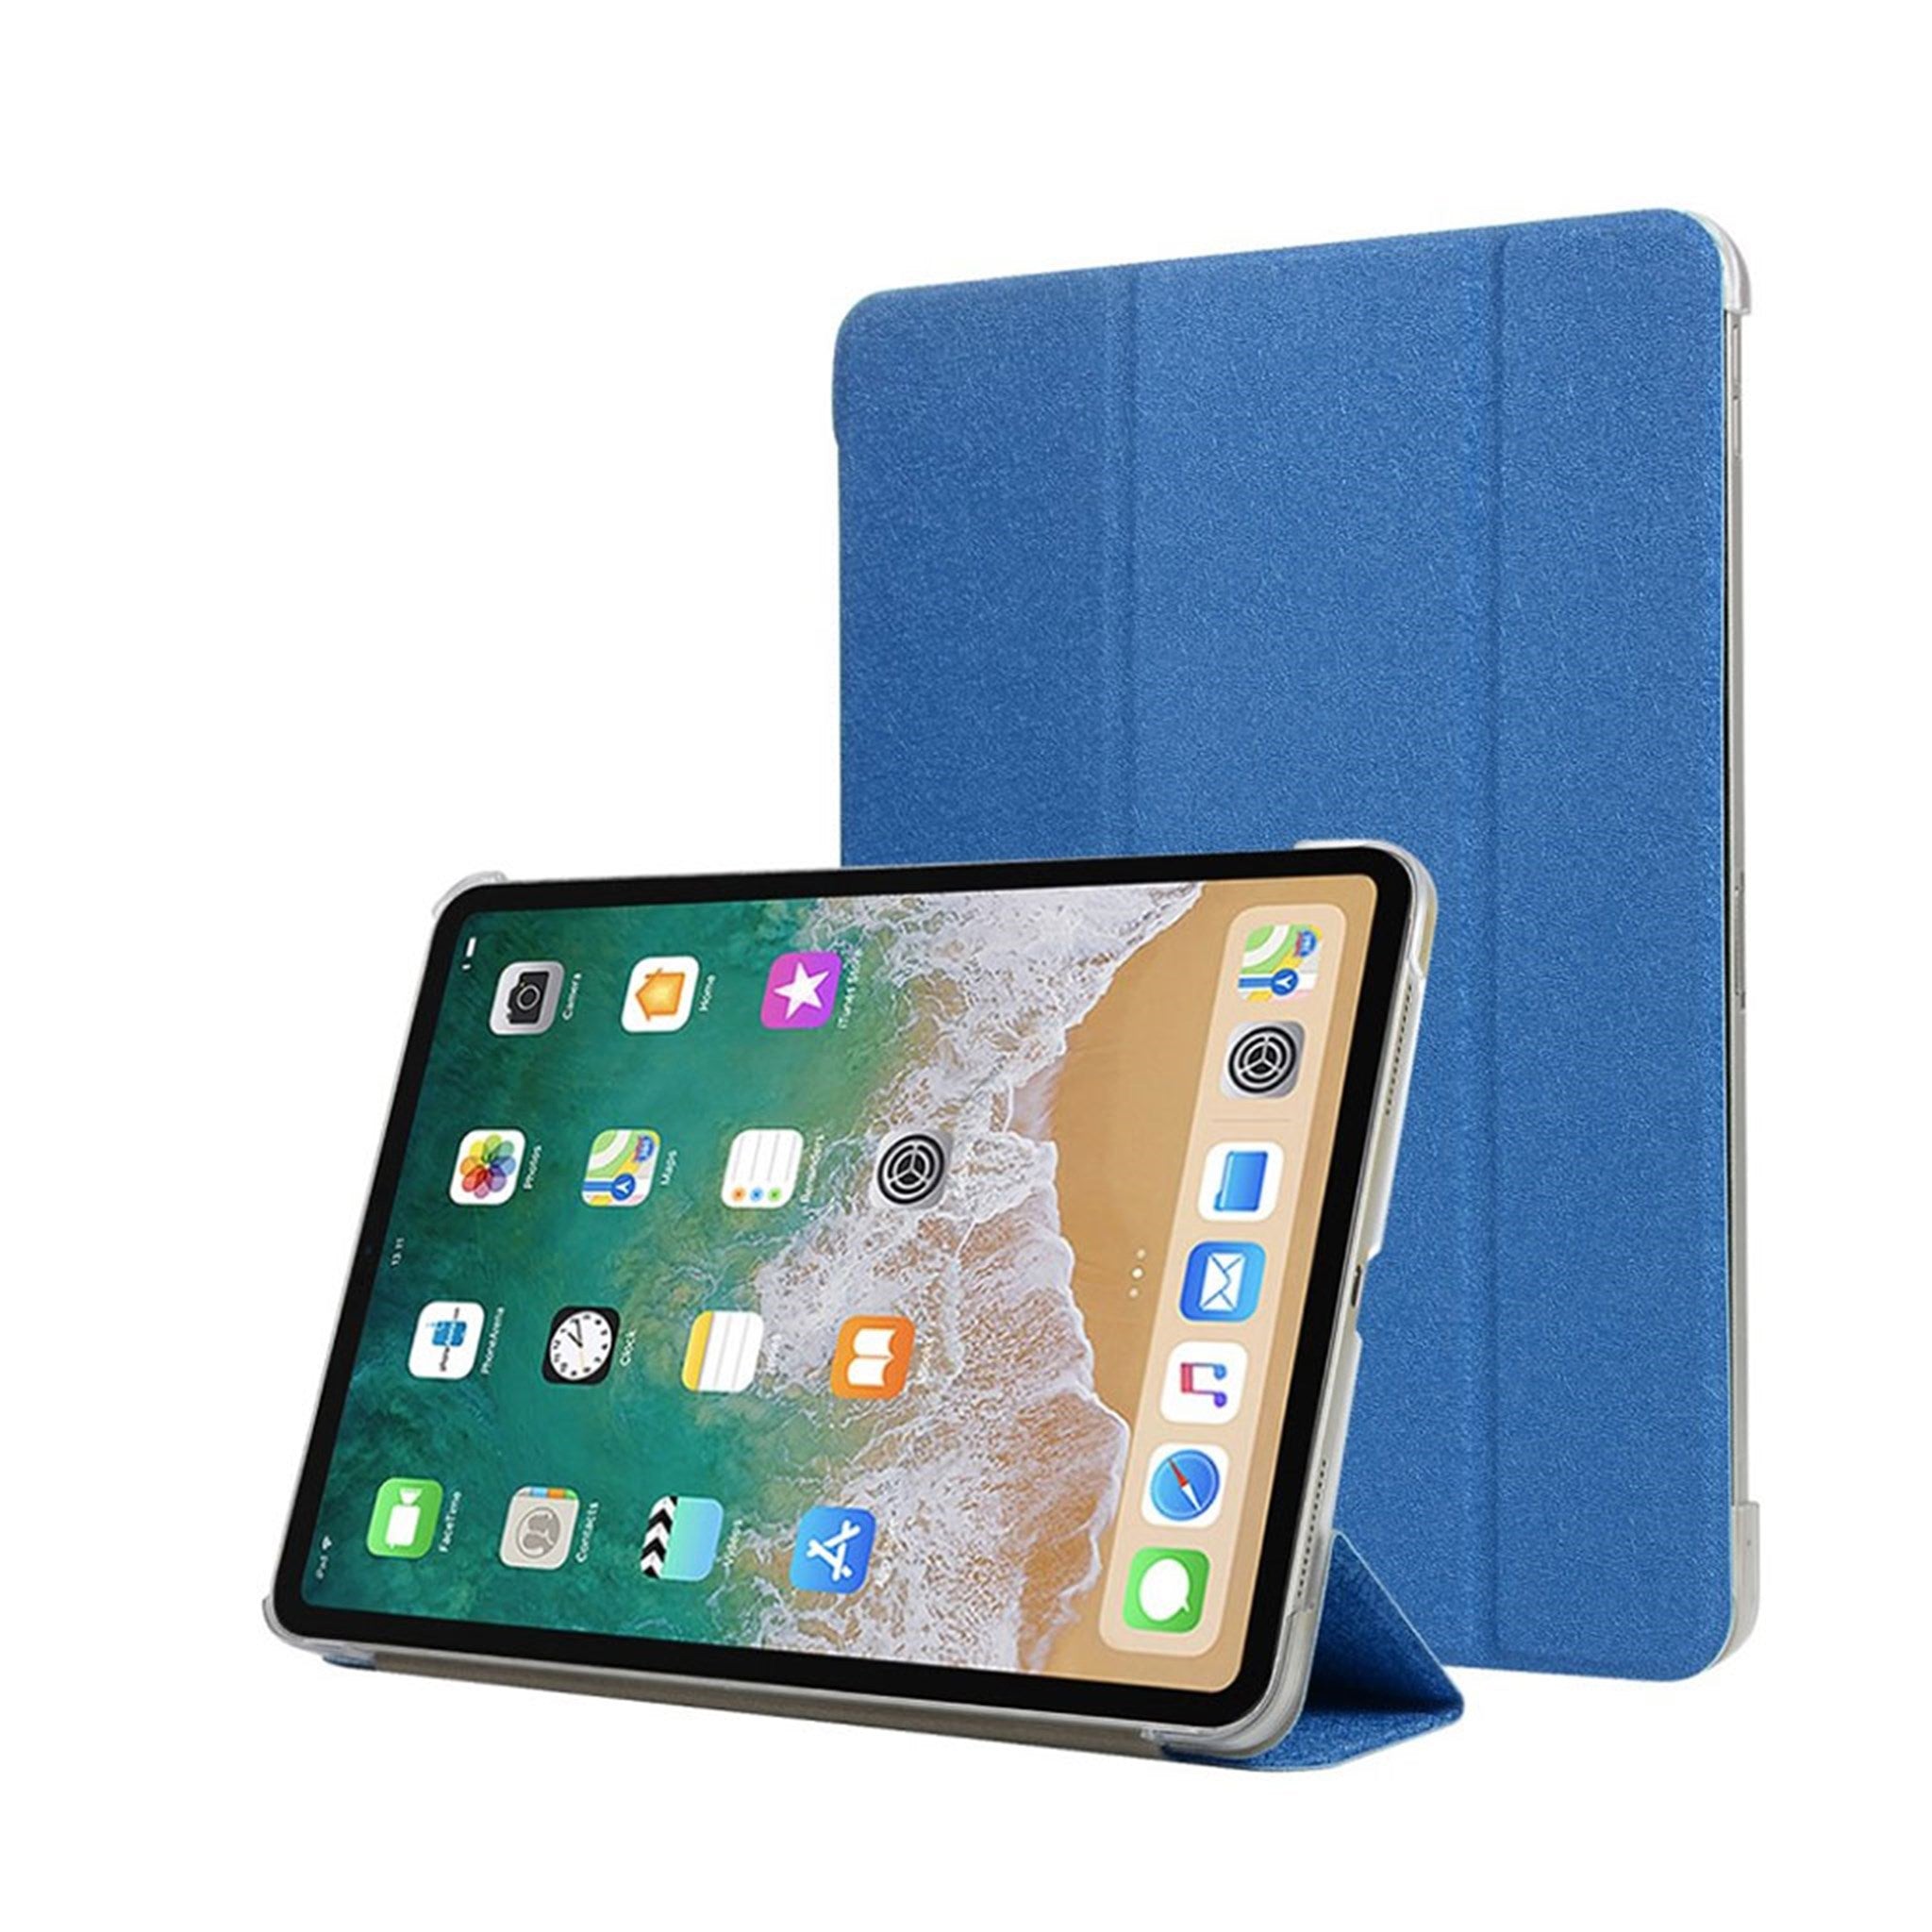 iPad Pro 11 inch (2018) tri-fold leather flip case - Dark Blue